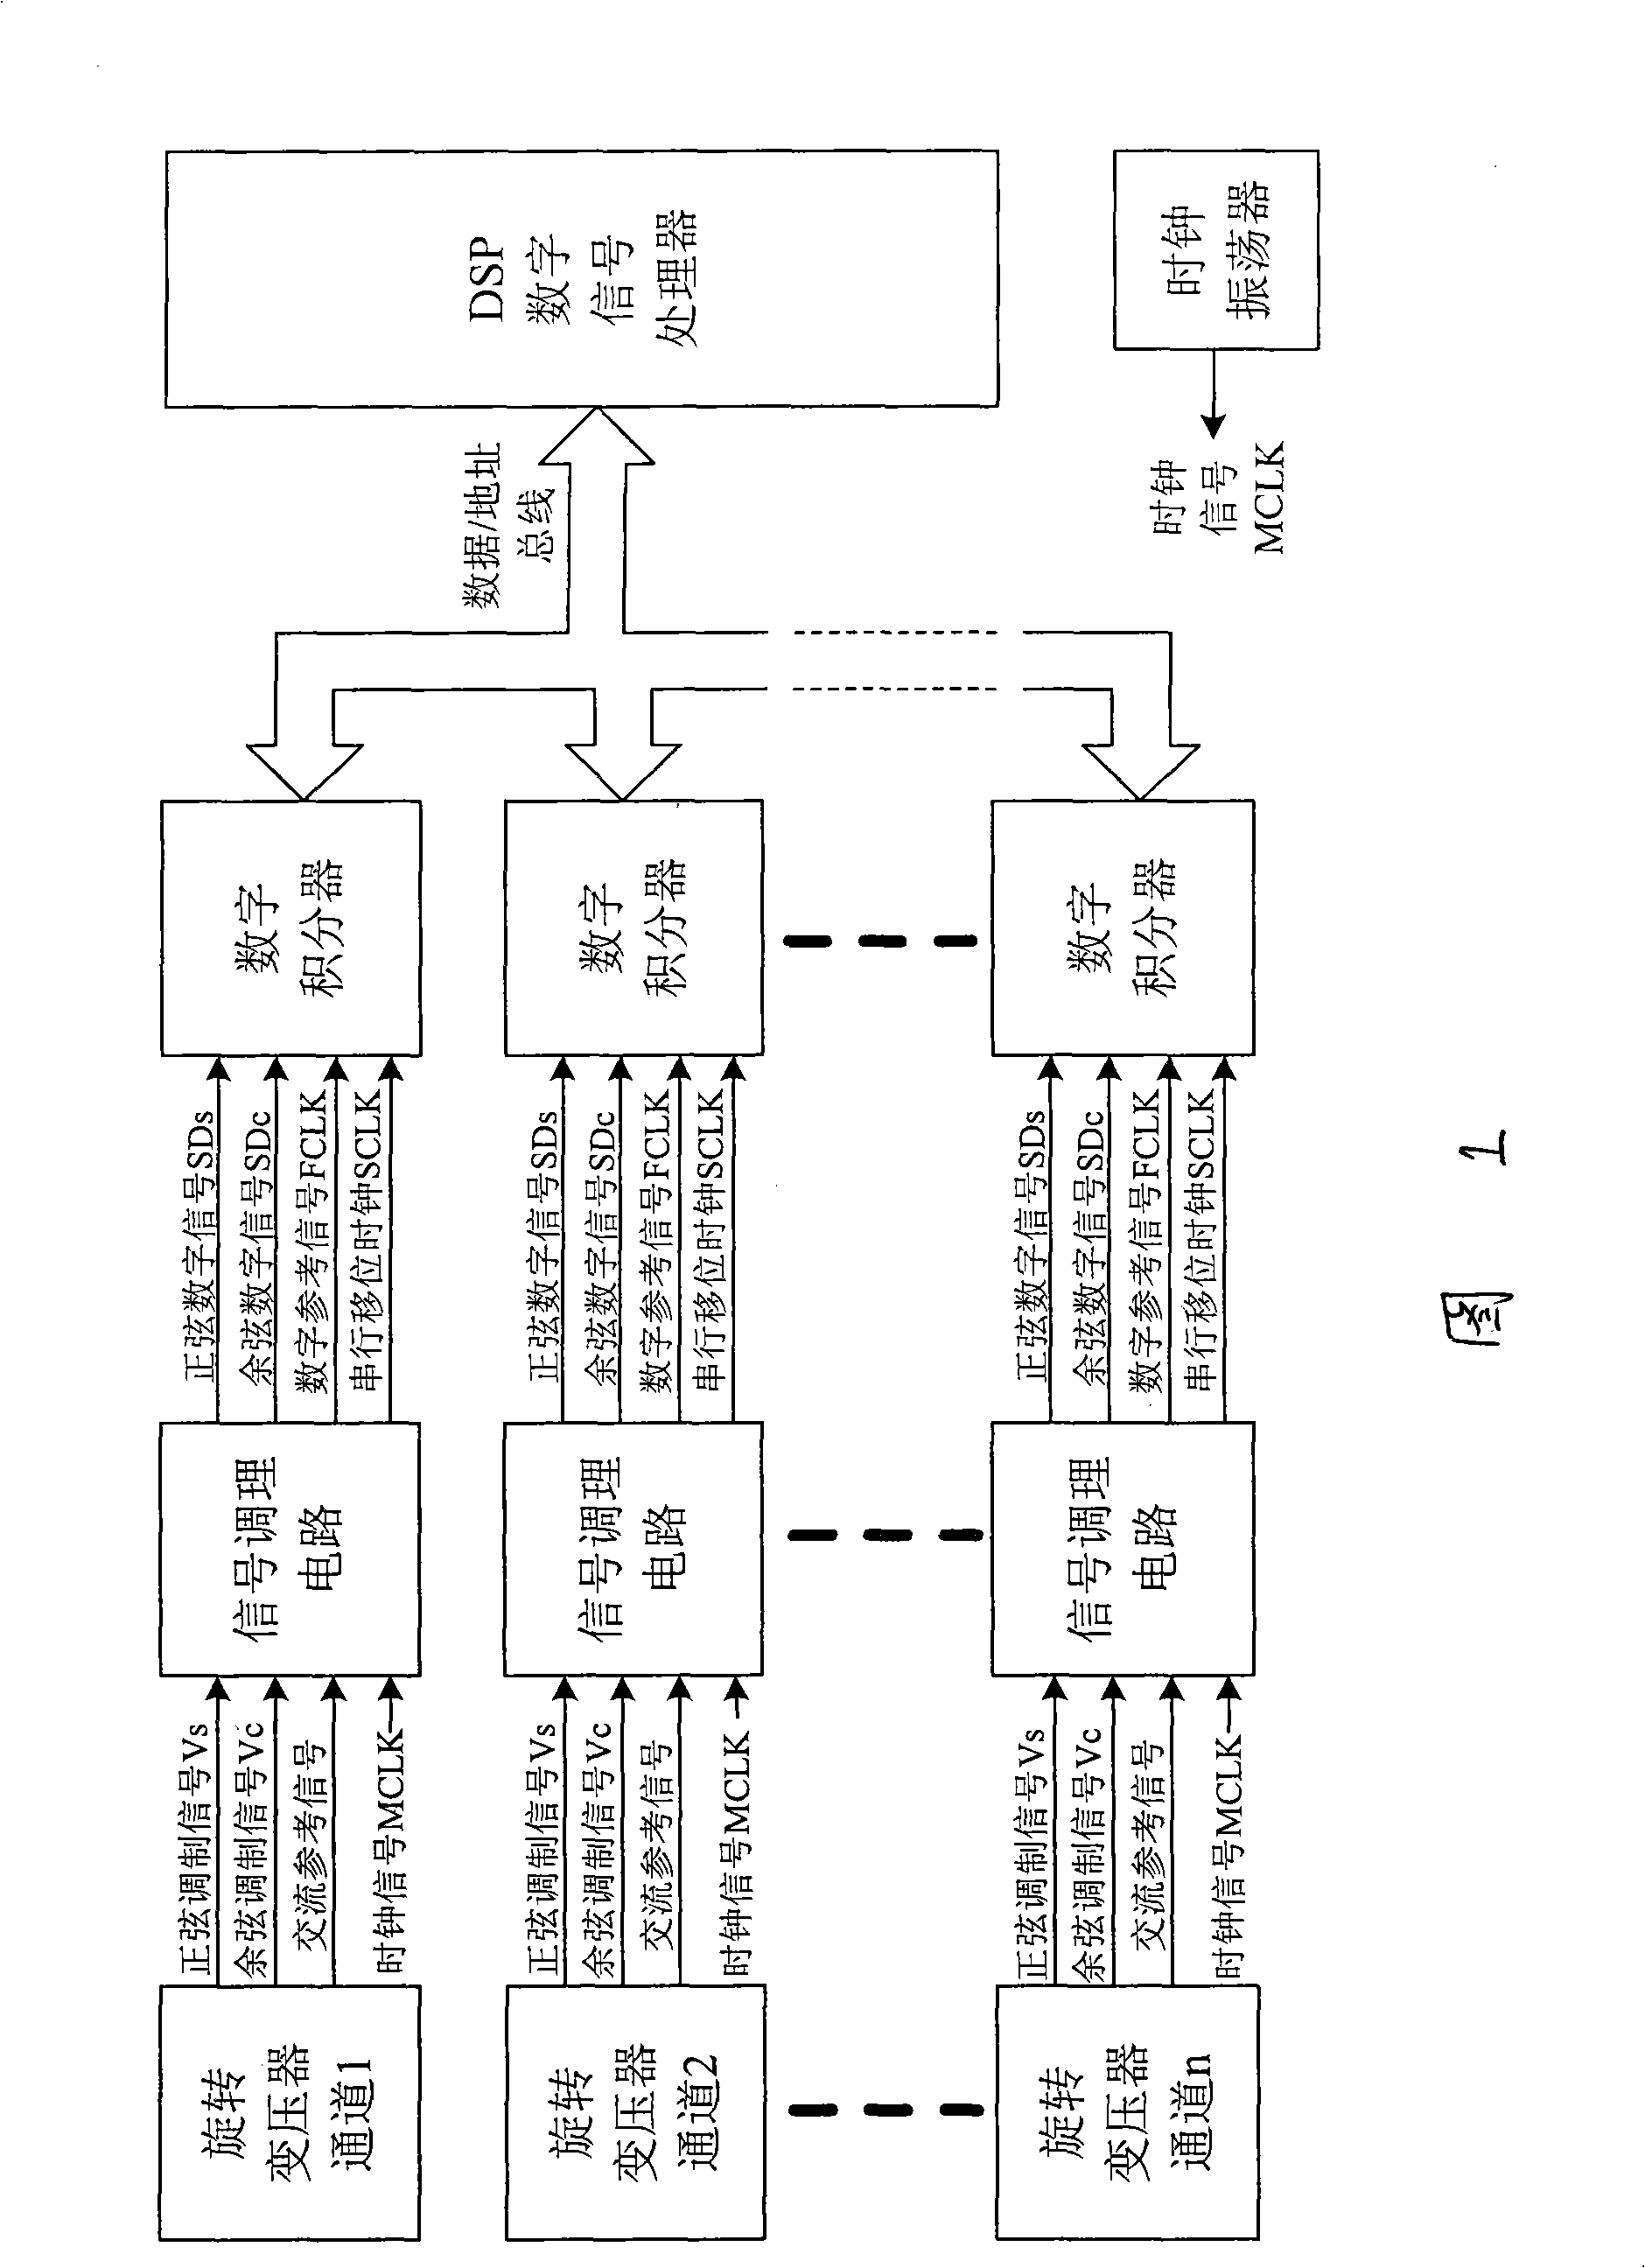 Signal-number conversion method of rotating transformer